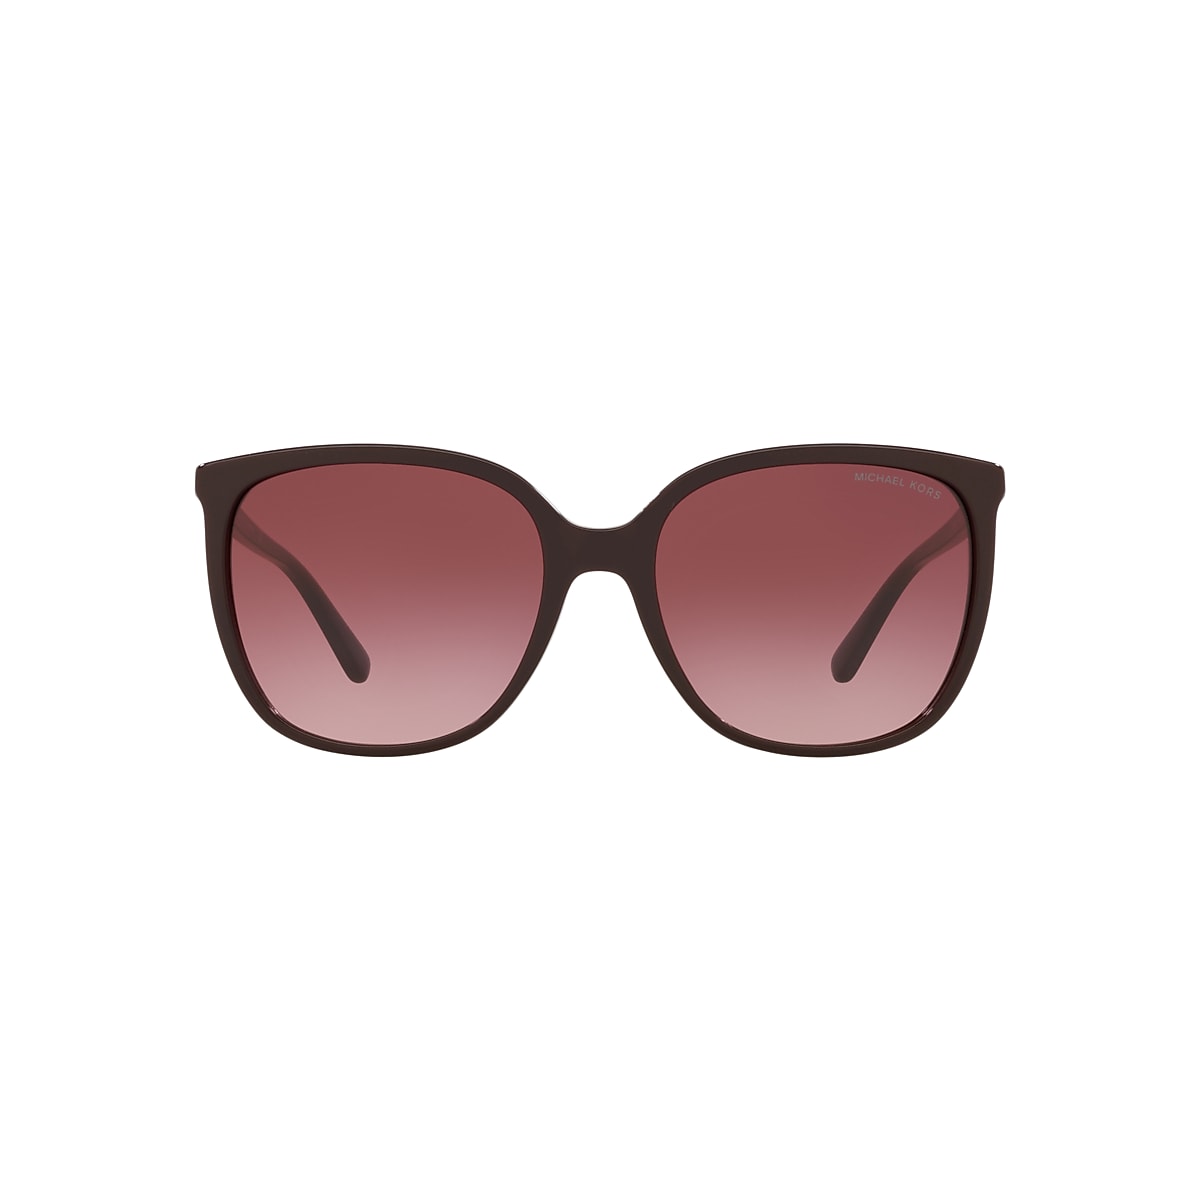 Sunglass Hut on X: Five ways to style the new Karlie by Michael Kors 🔥 🔎  MK2170U KARLIE  / X